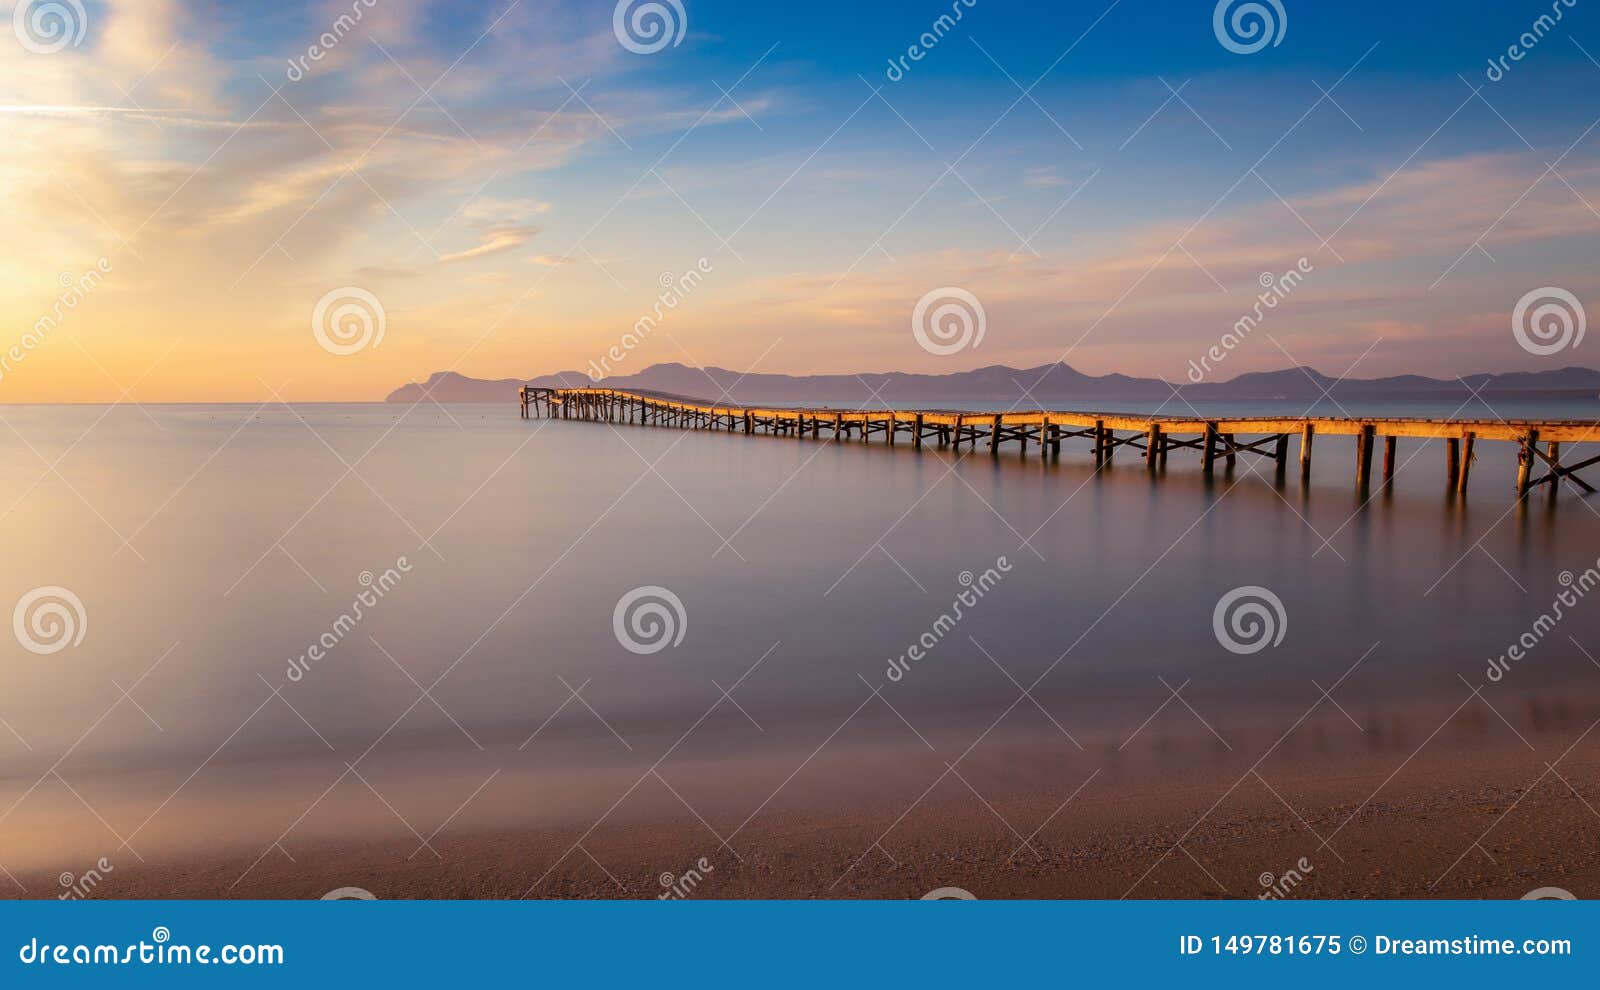 wooden pier / jetty, playa de muro, alcudia, sunrise, mountains, secluded beach, golden sunlight, reflection, beautiful sky,